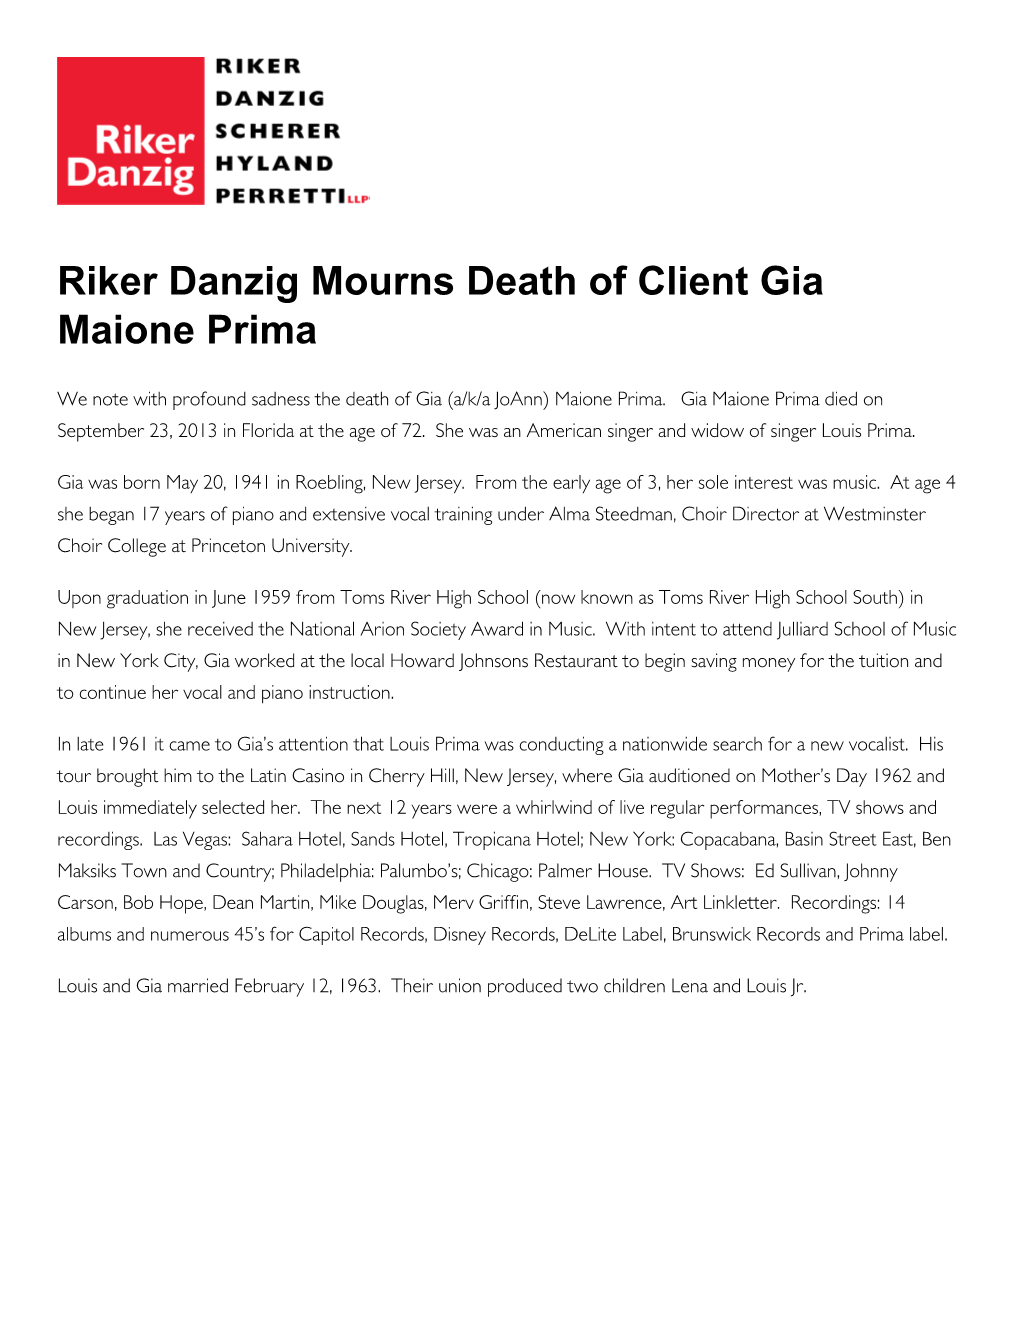 Riker Danzig Mourns Death of Client Gia Maione Prima